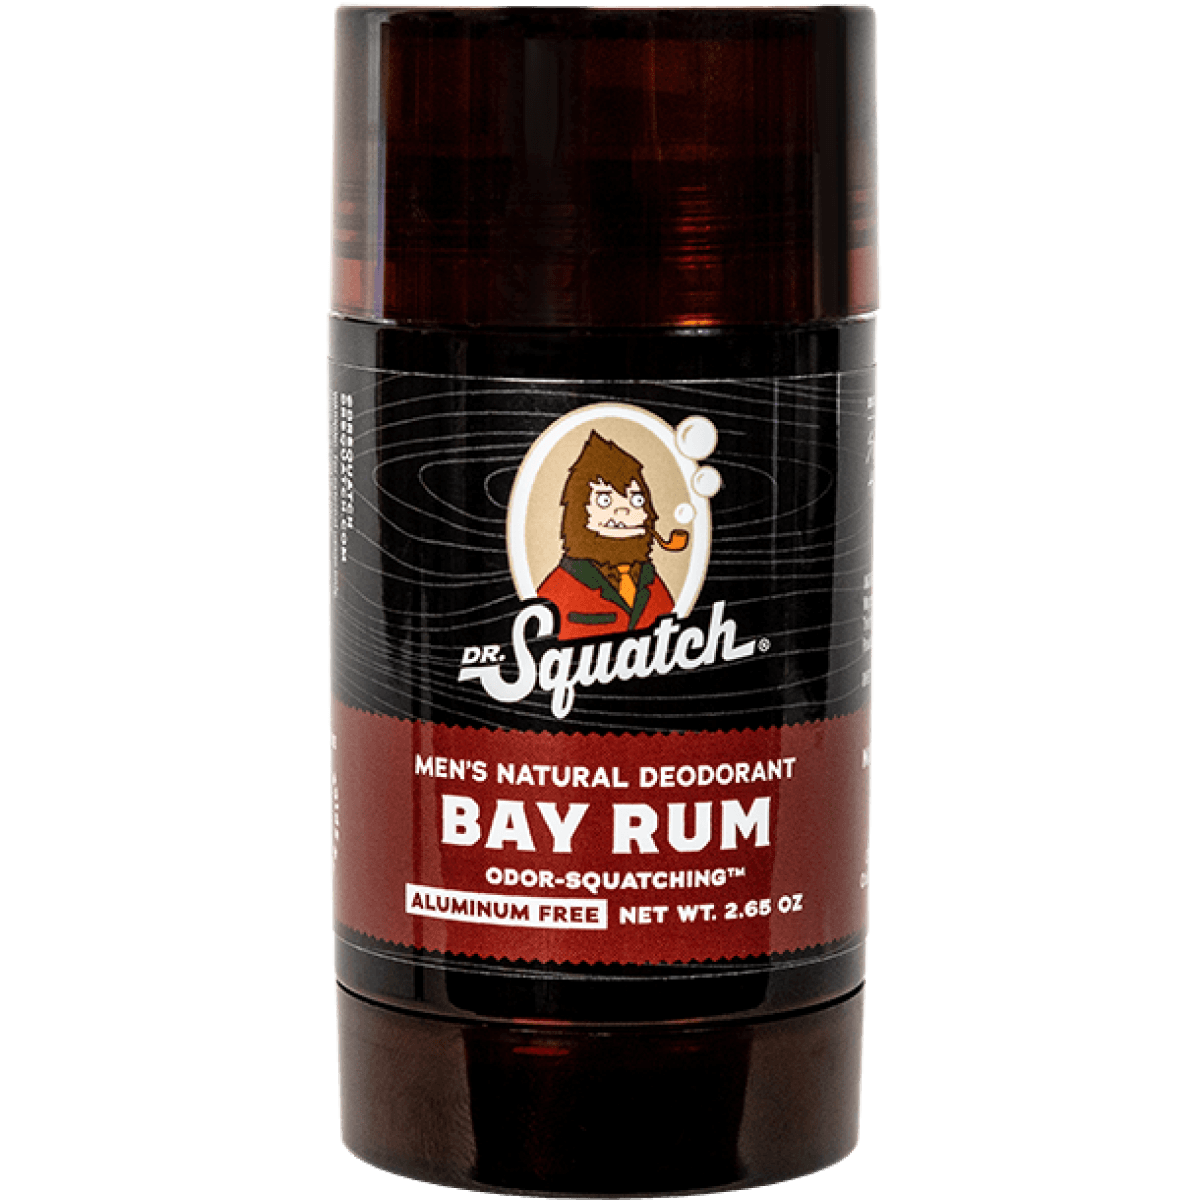 vandring Sydamerika rolige Bay Rum Deodorant | Dr. Squatch